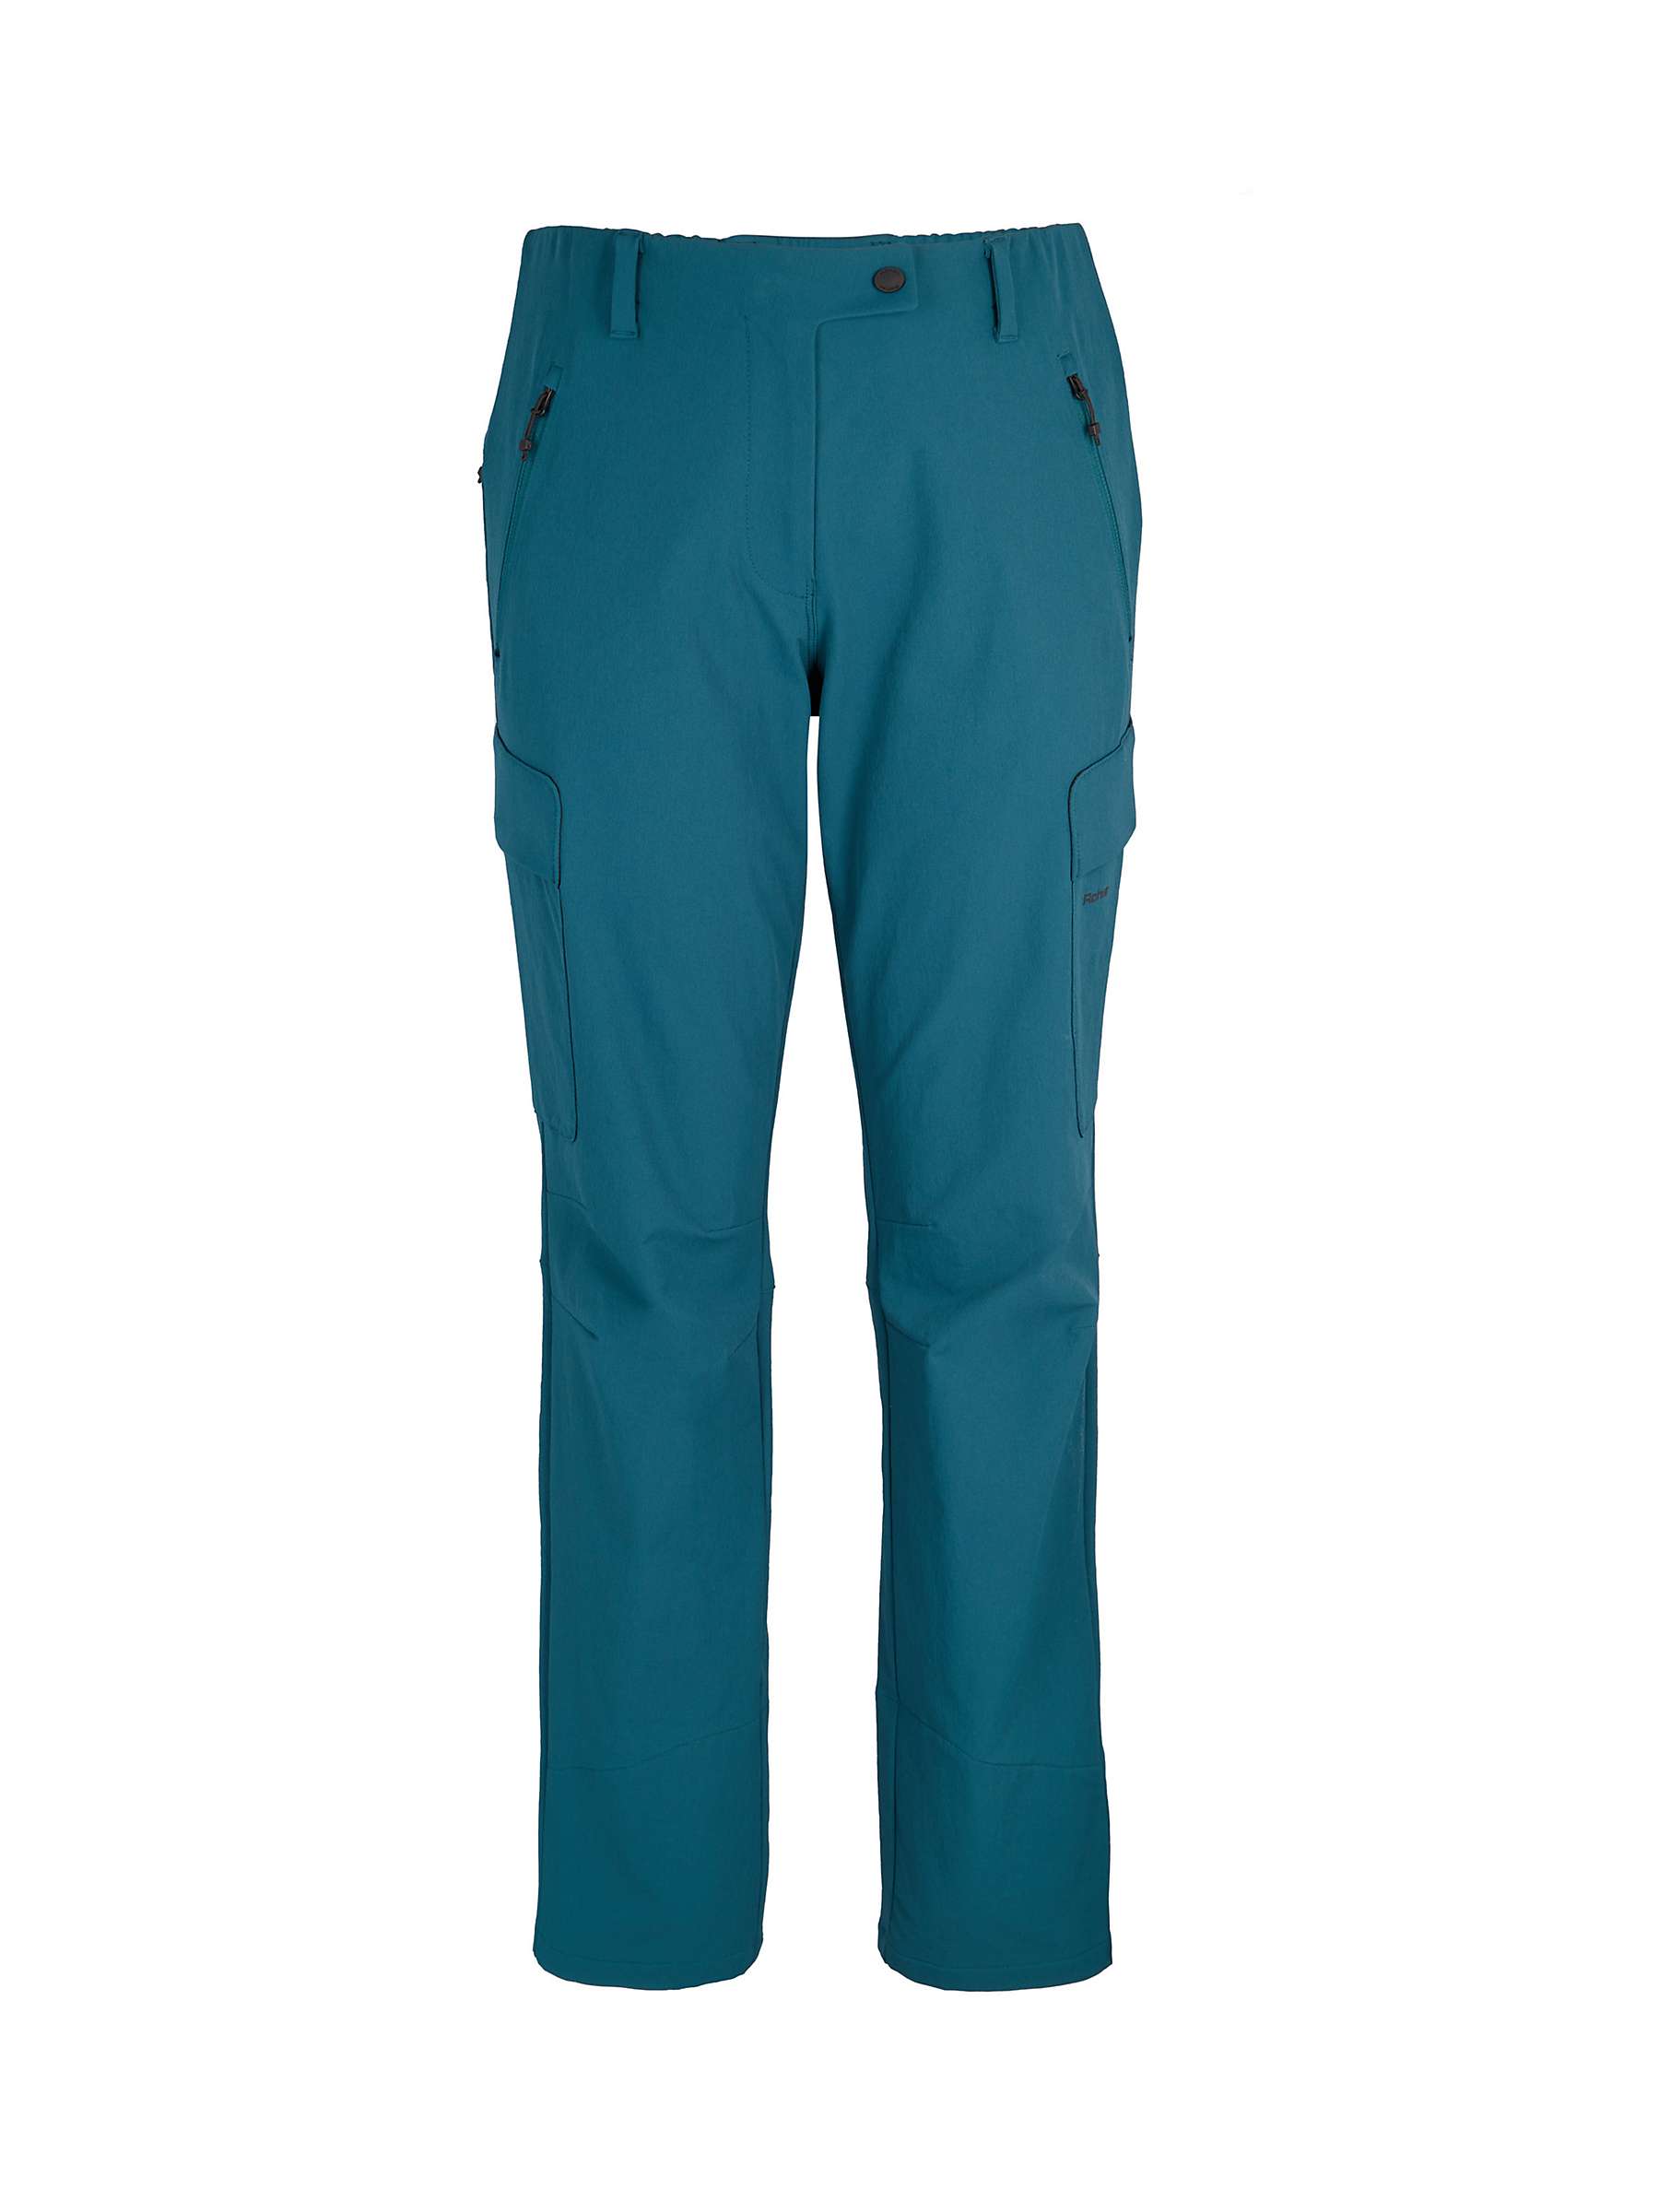 Buy Rohan Glen Cargo Walking Trousers Online at johnlewis.com